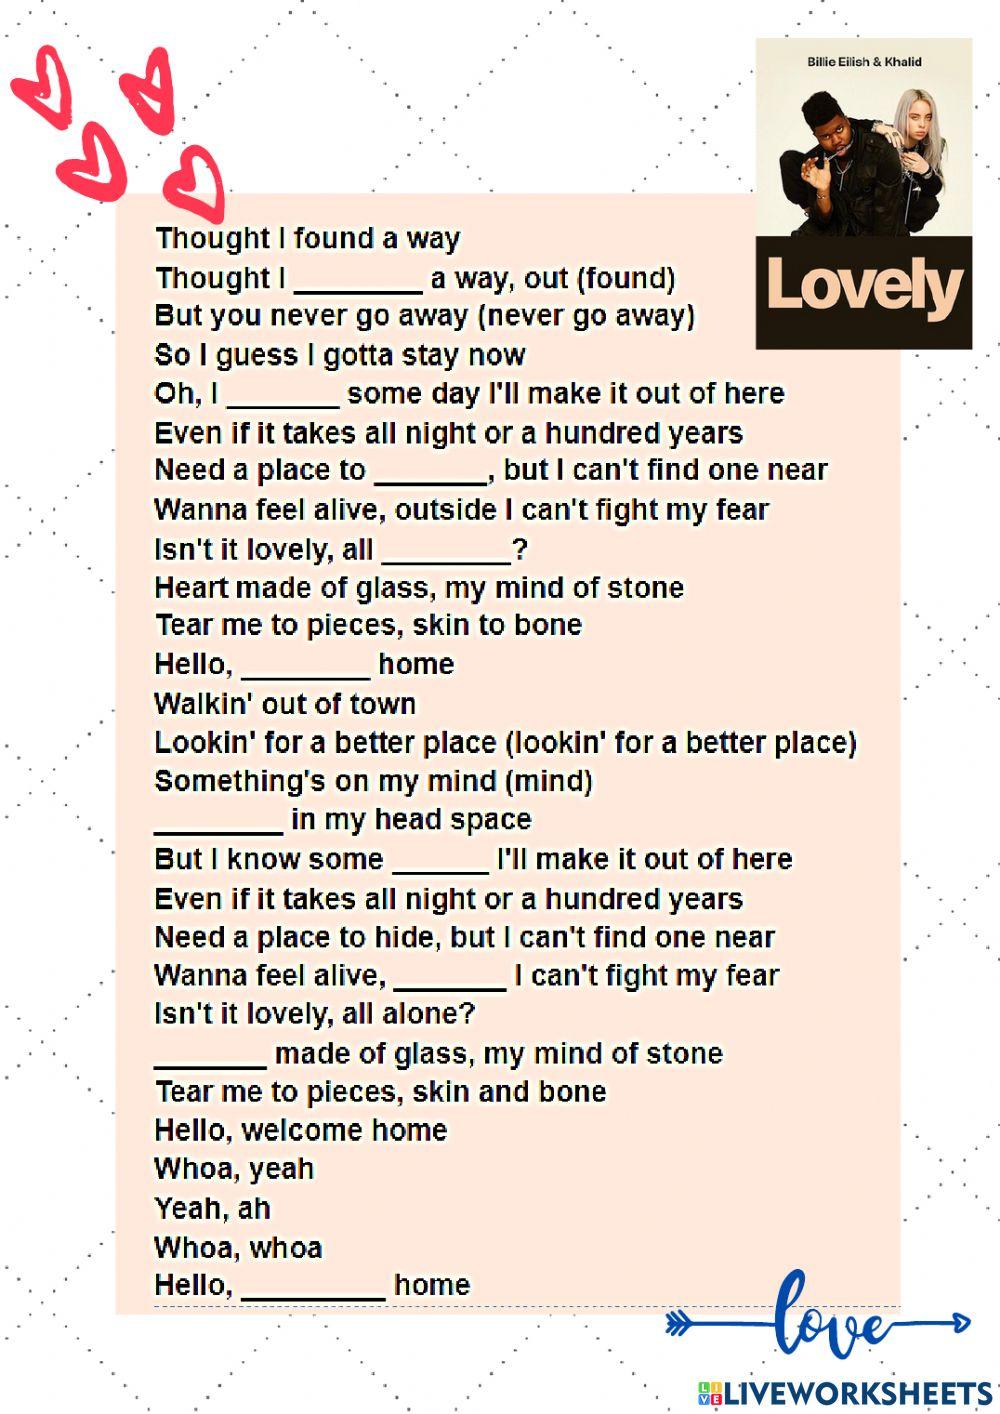 Billie Eilish - lovely (Lyrics) 